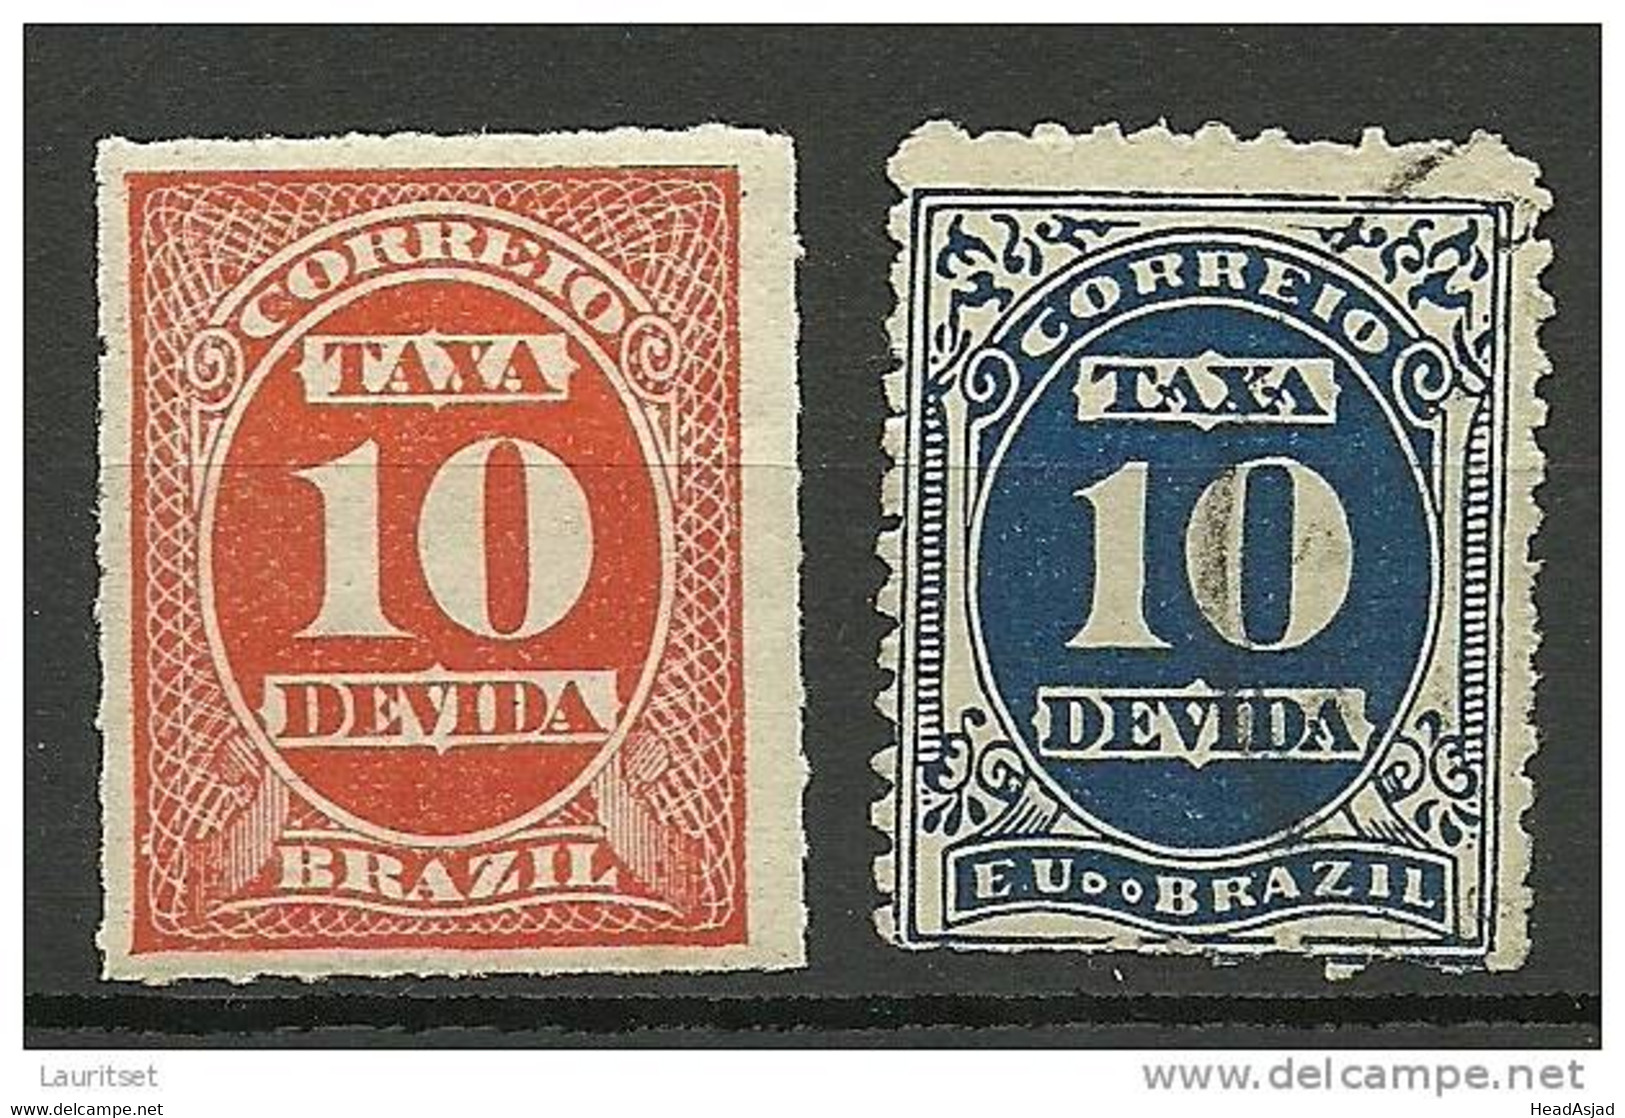 BRAZIL Brazilia 1890 - 1895 Portomarken Taxa Devida - Postage Due